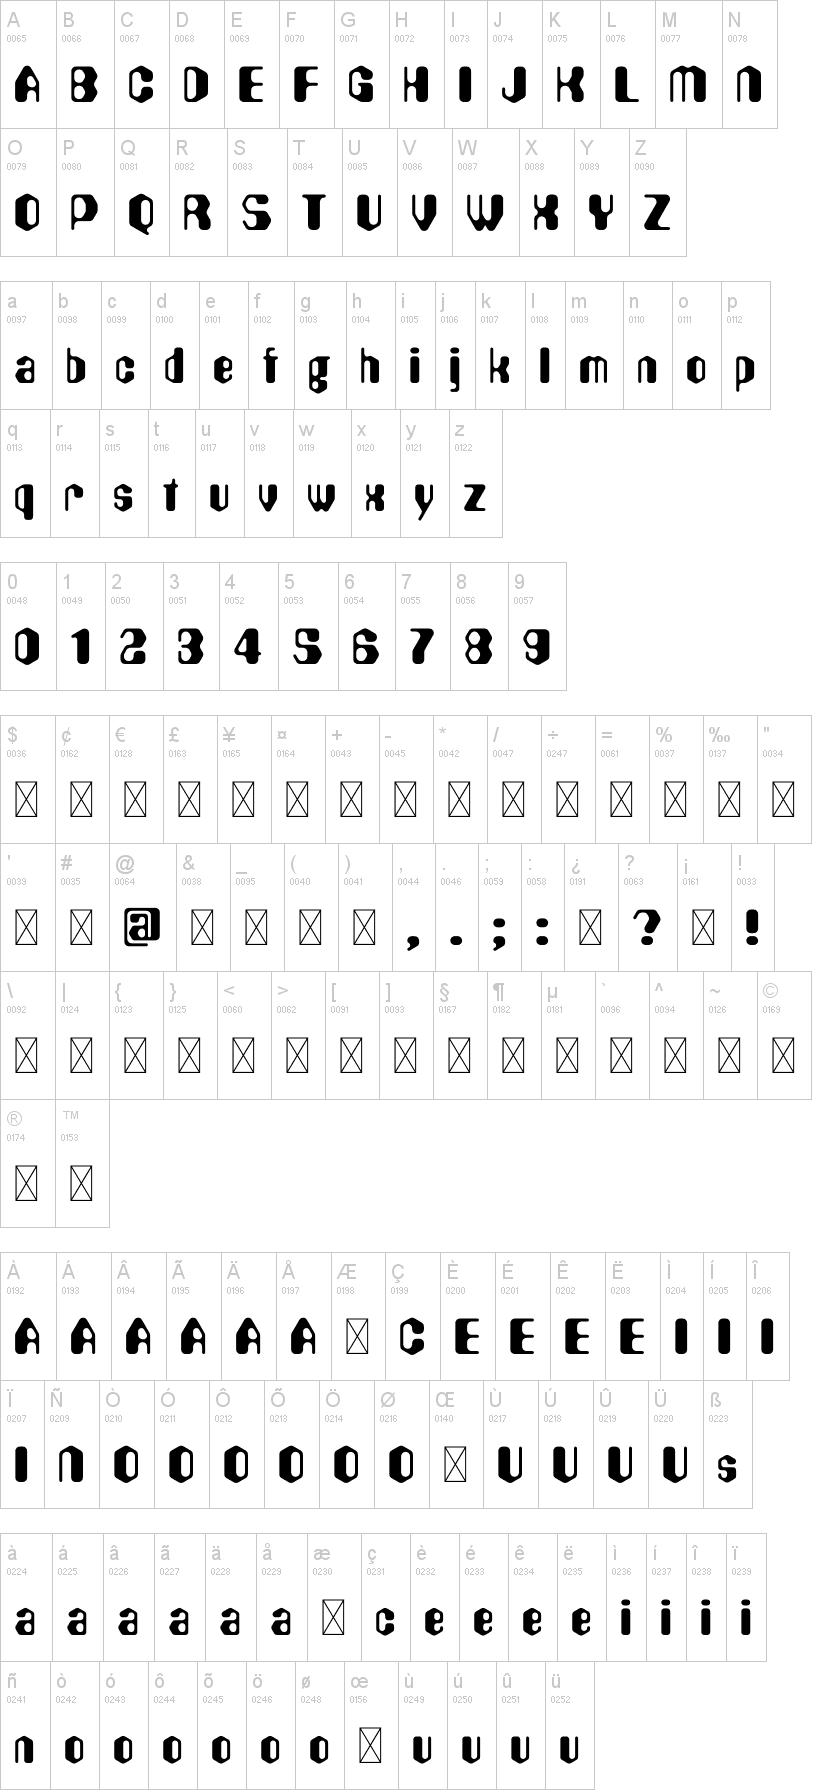 Hexadecimal字符映射图